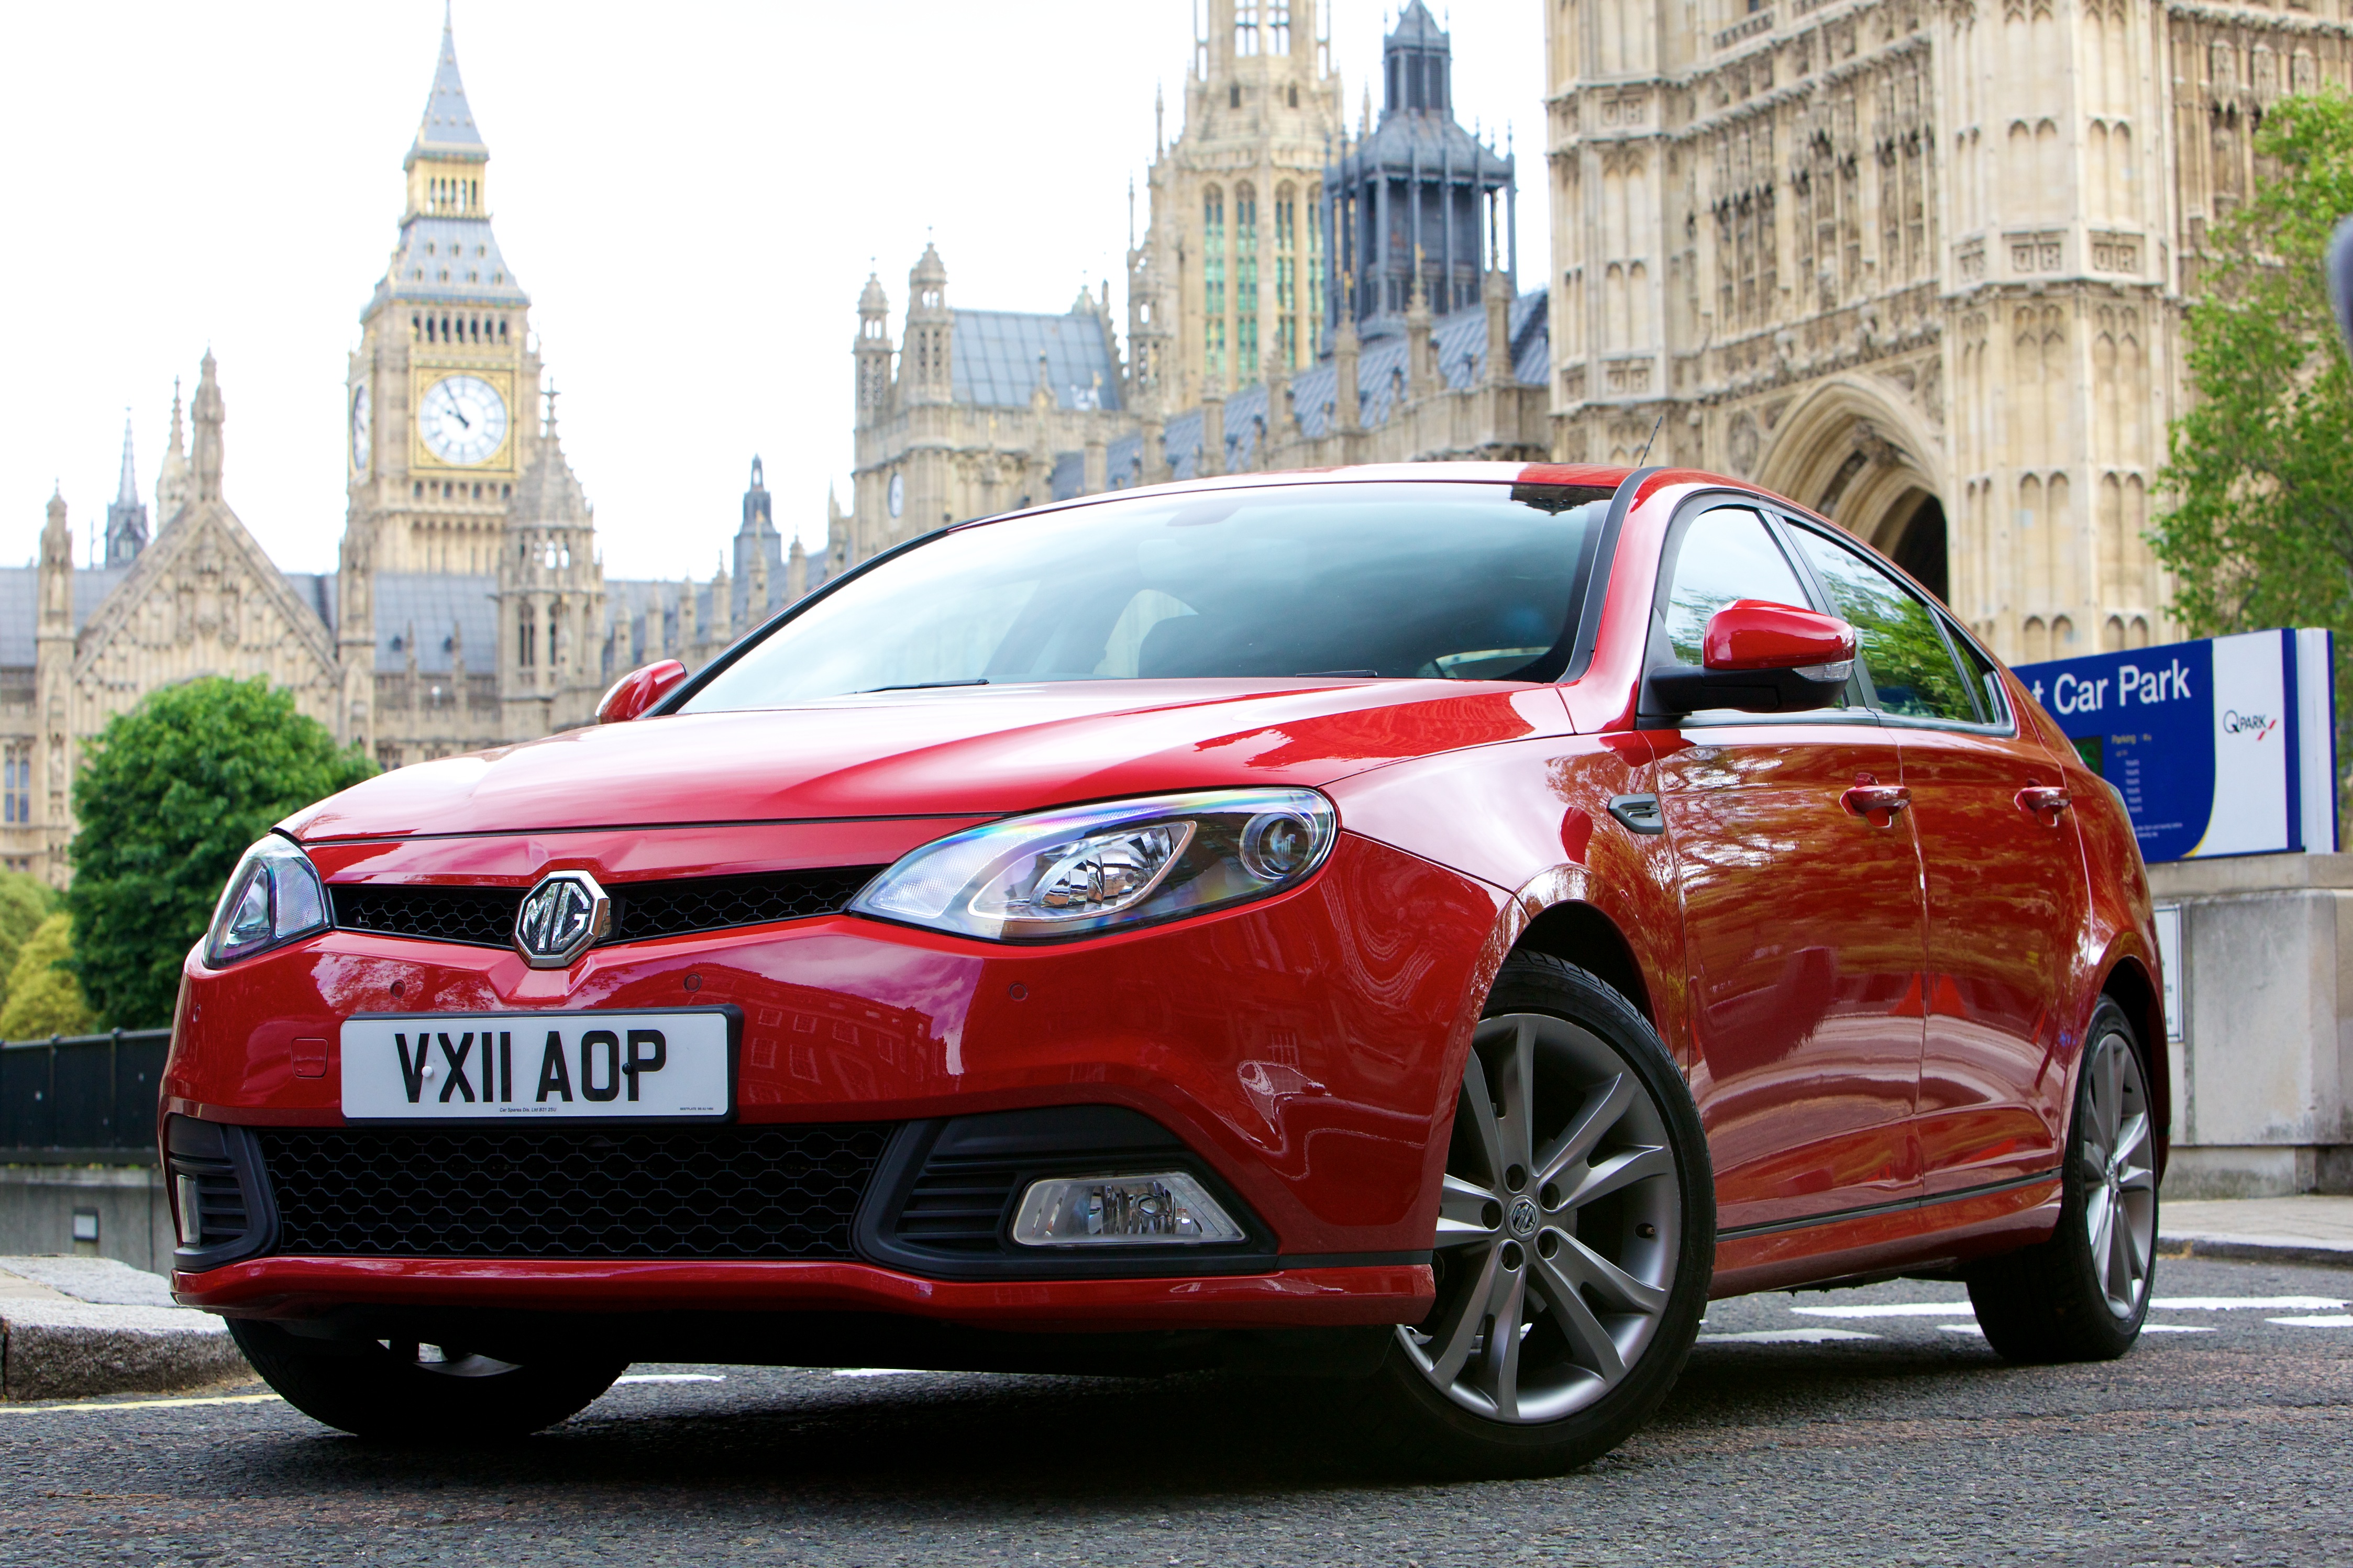 MG6 highest ranking UK-built car in Driver Power 2014 survey